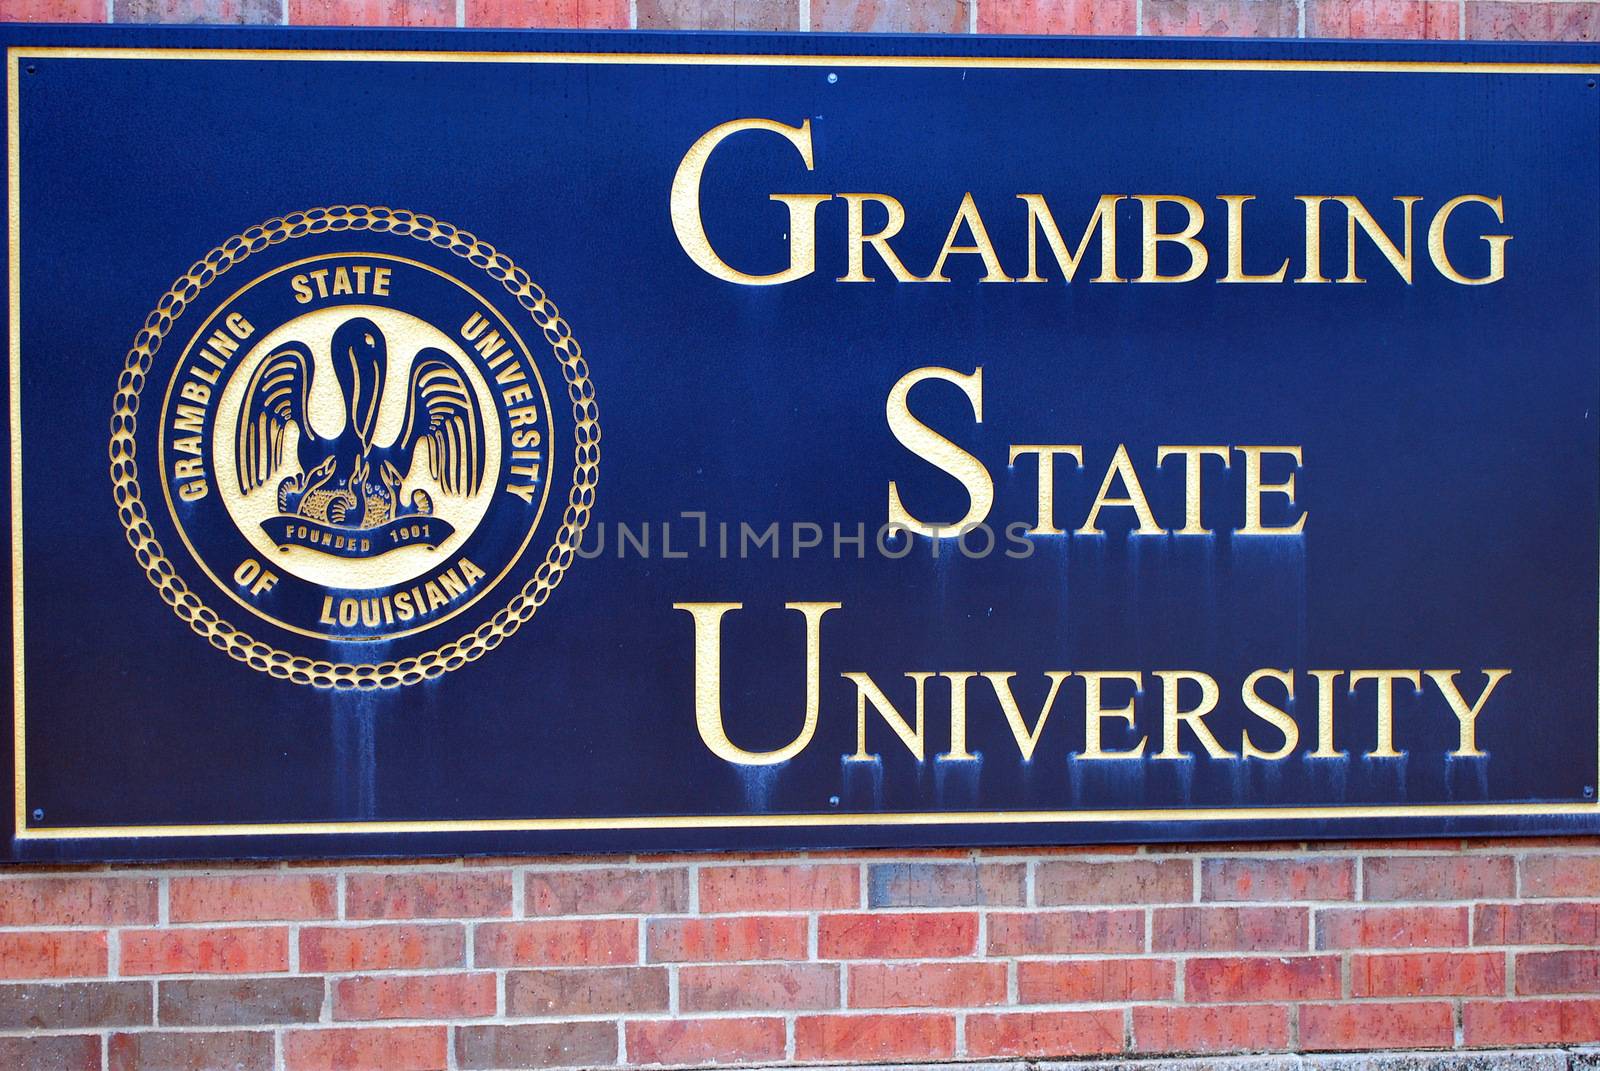 Grambling State University entrance sign displayed outdoors.